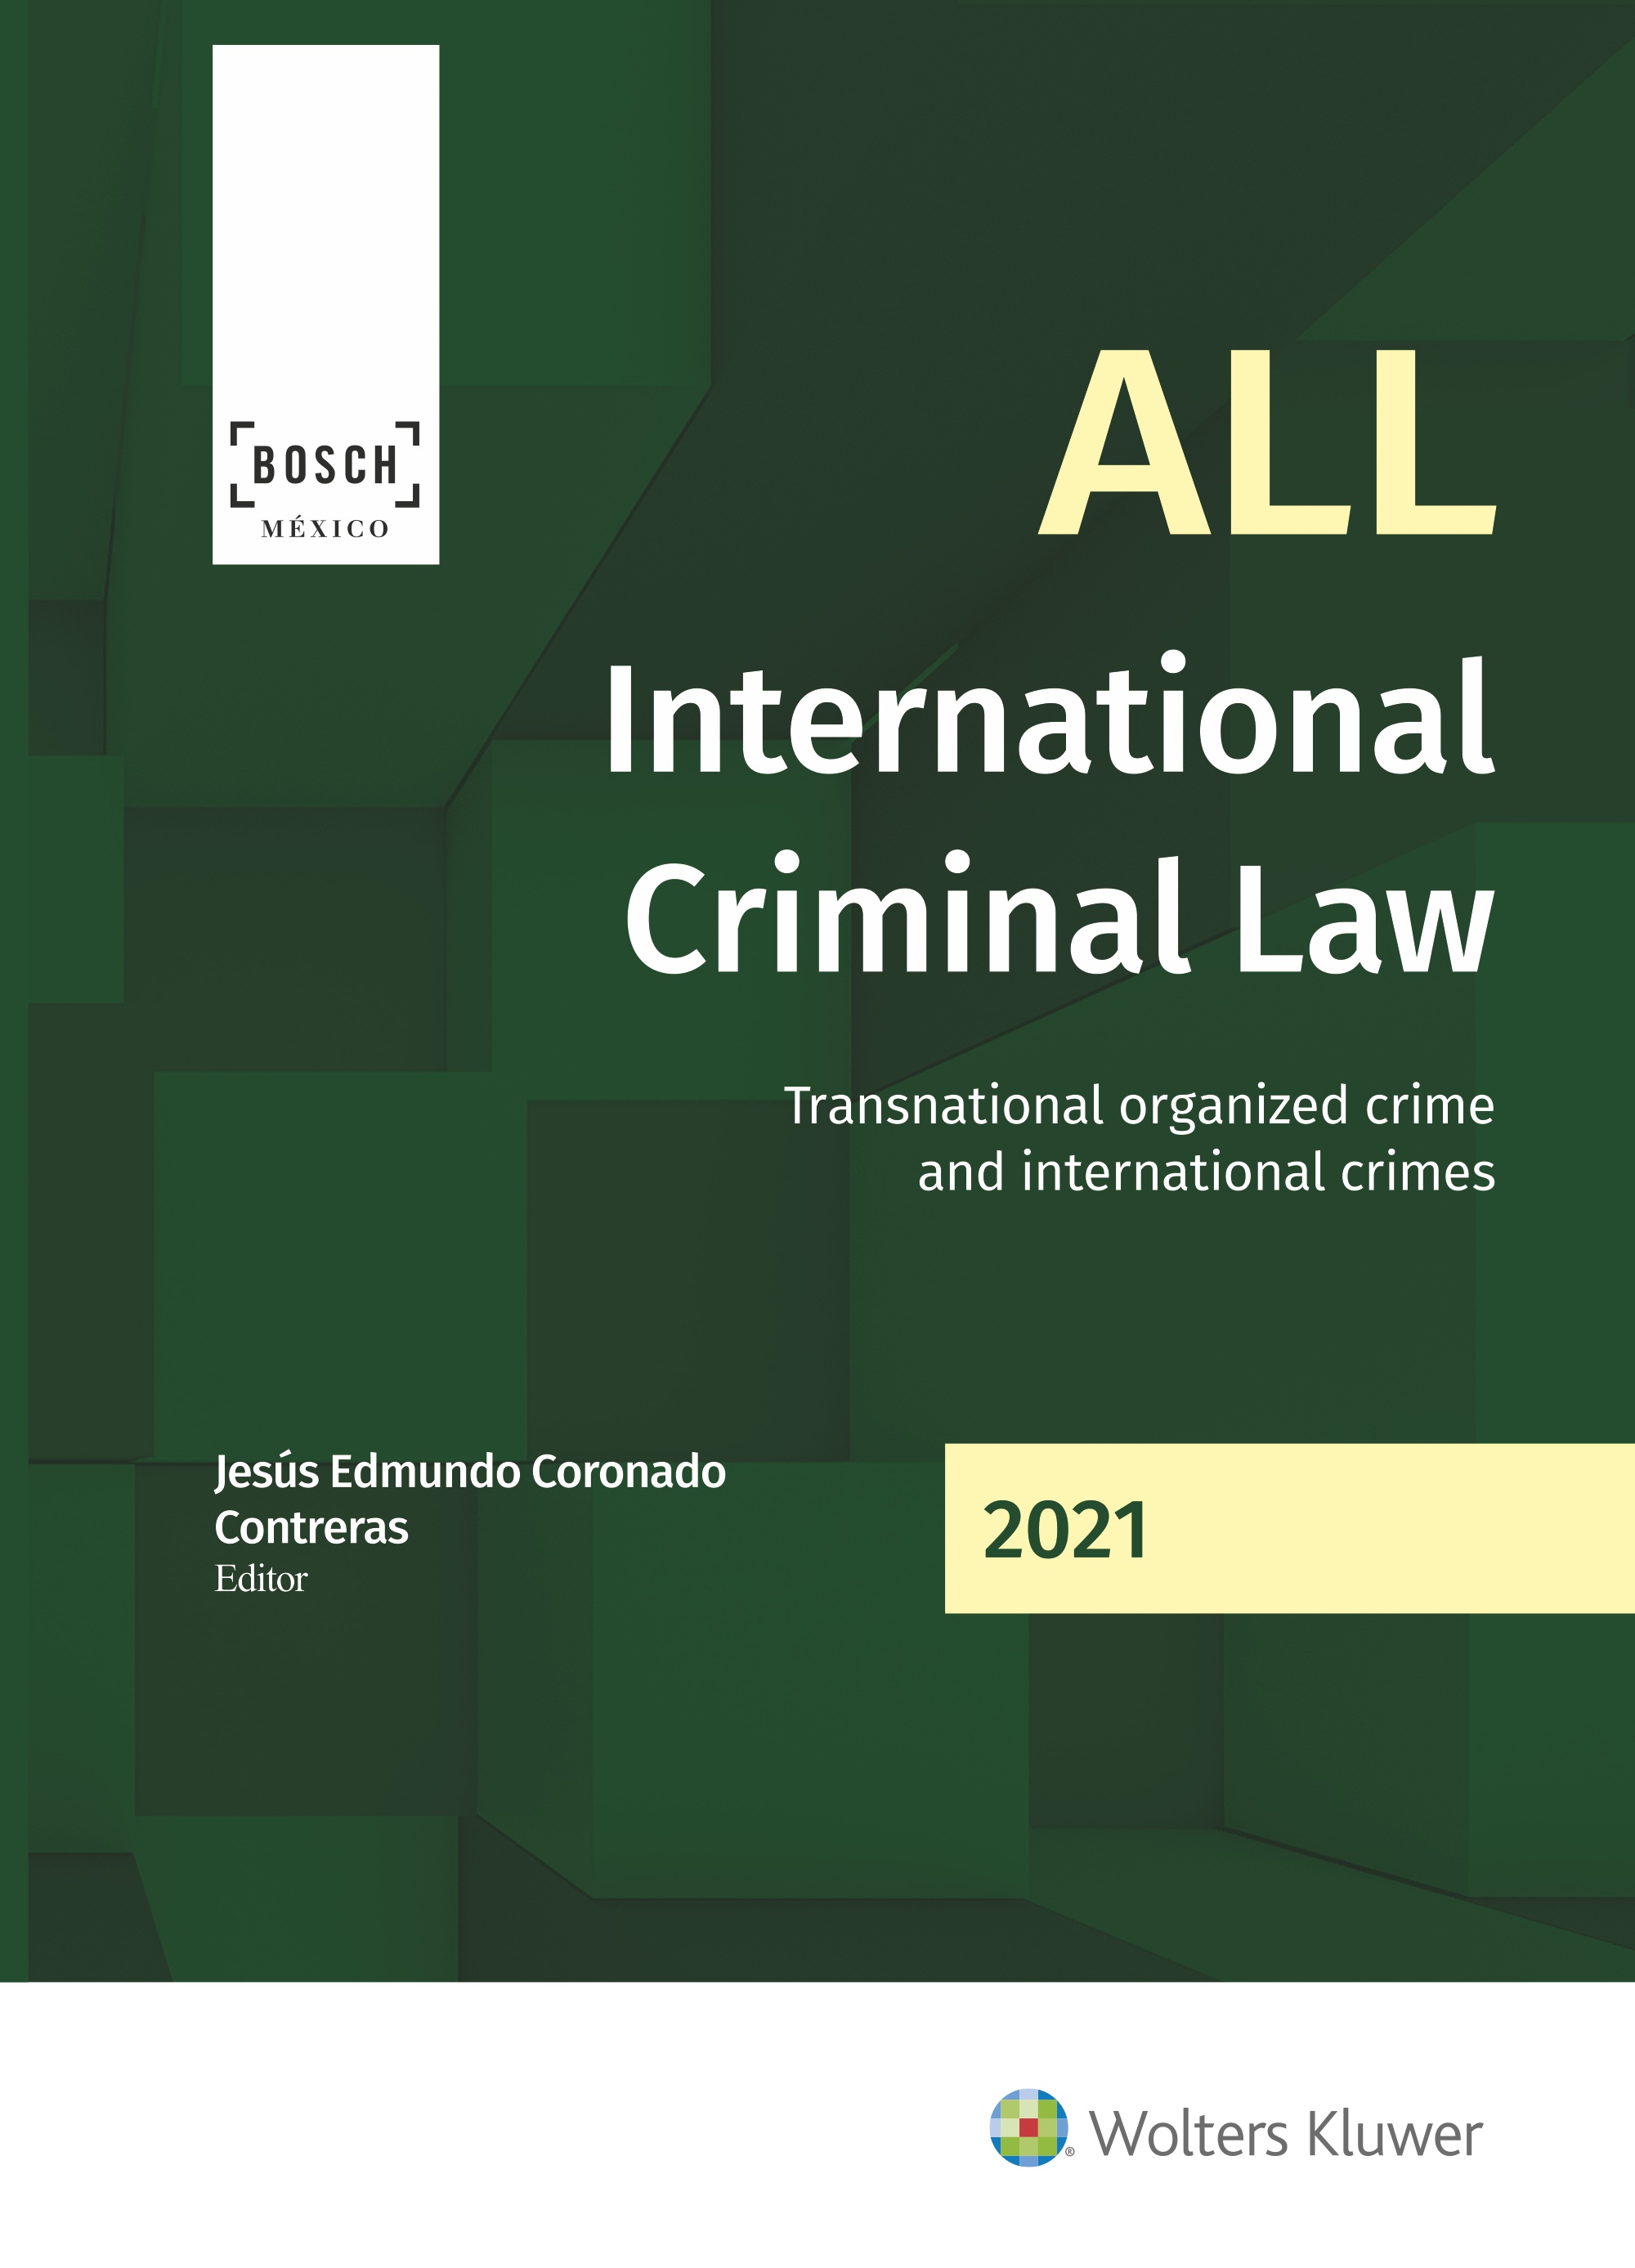 All International Criminal Law   «Transnational organized crime and international crimes»